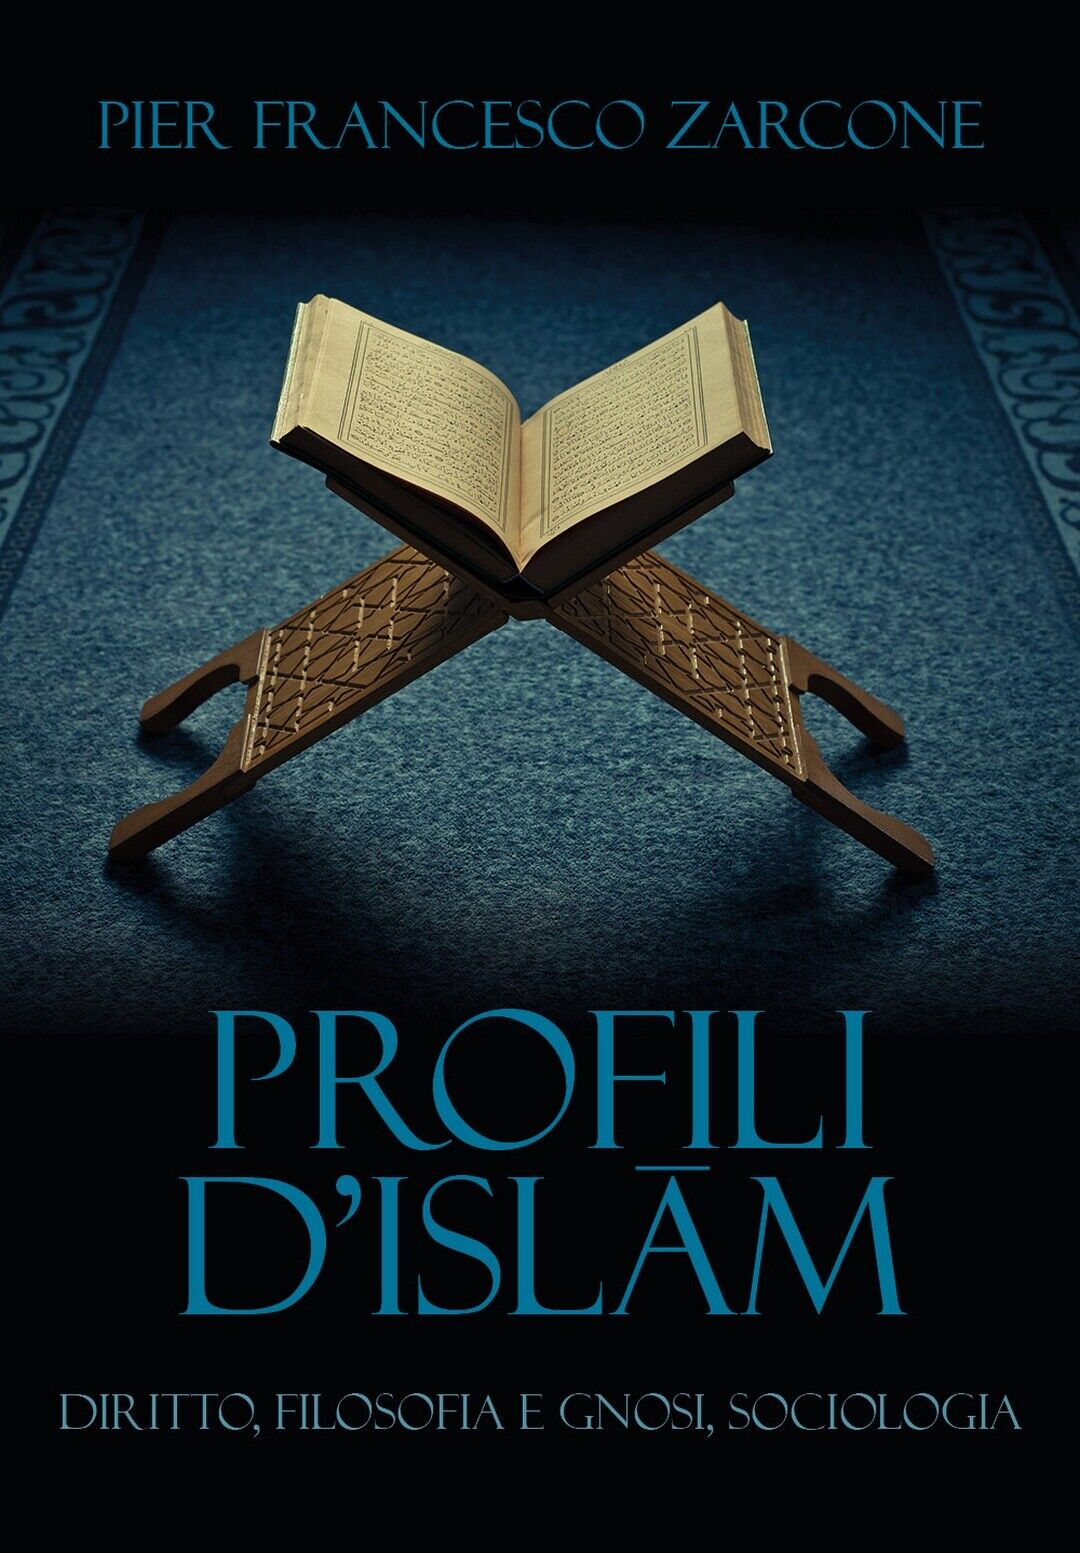 Profili d'Islam  di Pier Francesco Zarcone,  2020,  Youcanprint